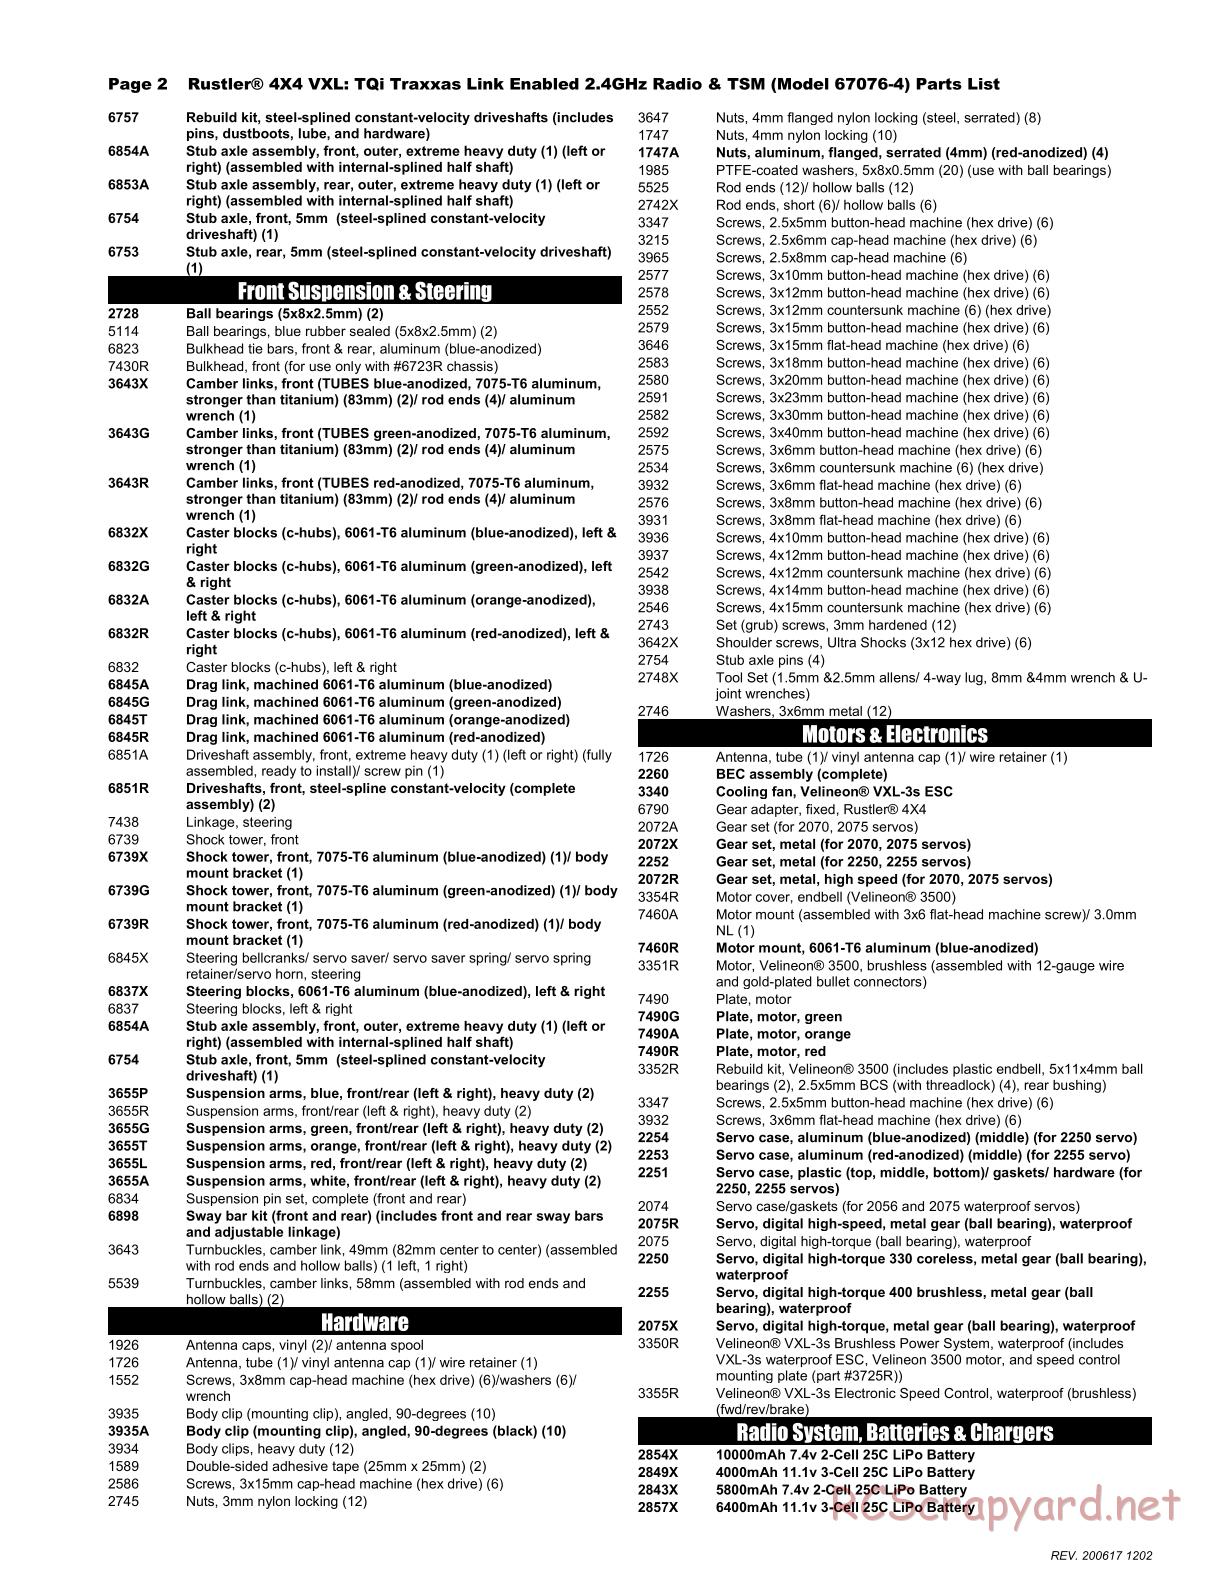 Traxxas - Rustler 4x4 VXL - Parts List - Page 2